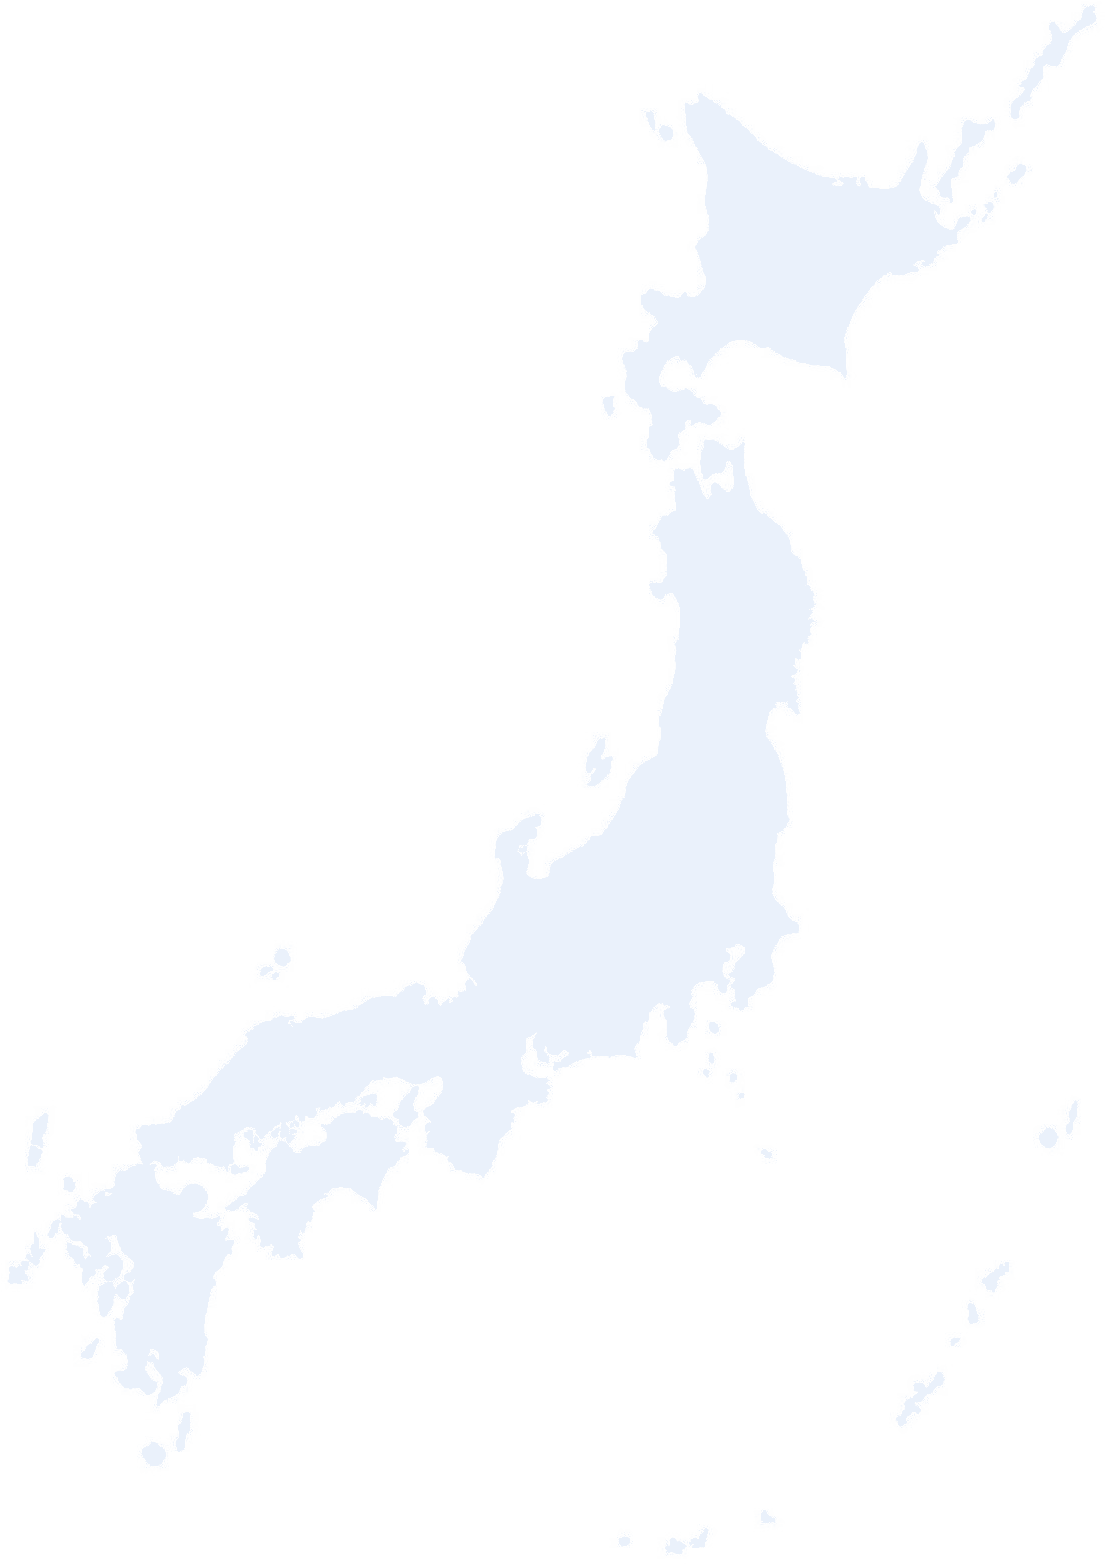 japan_map